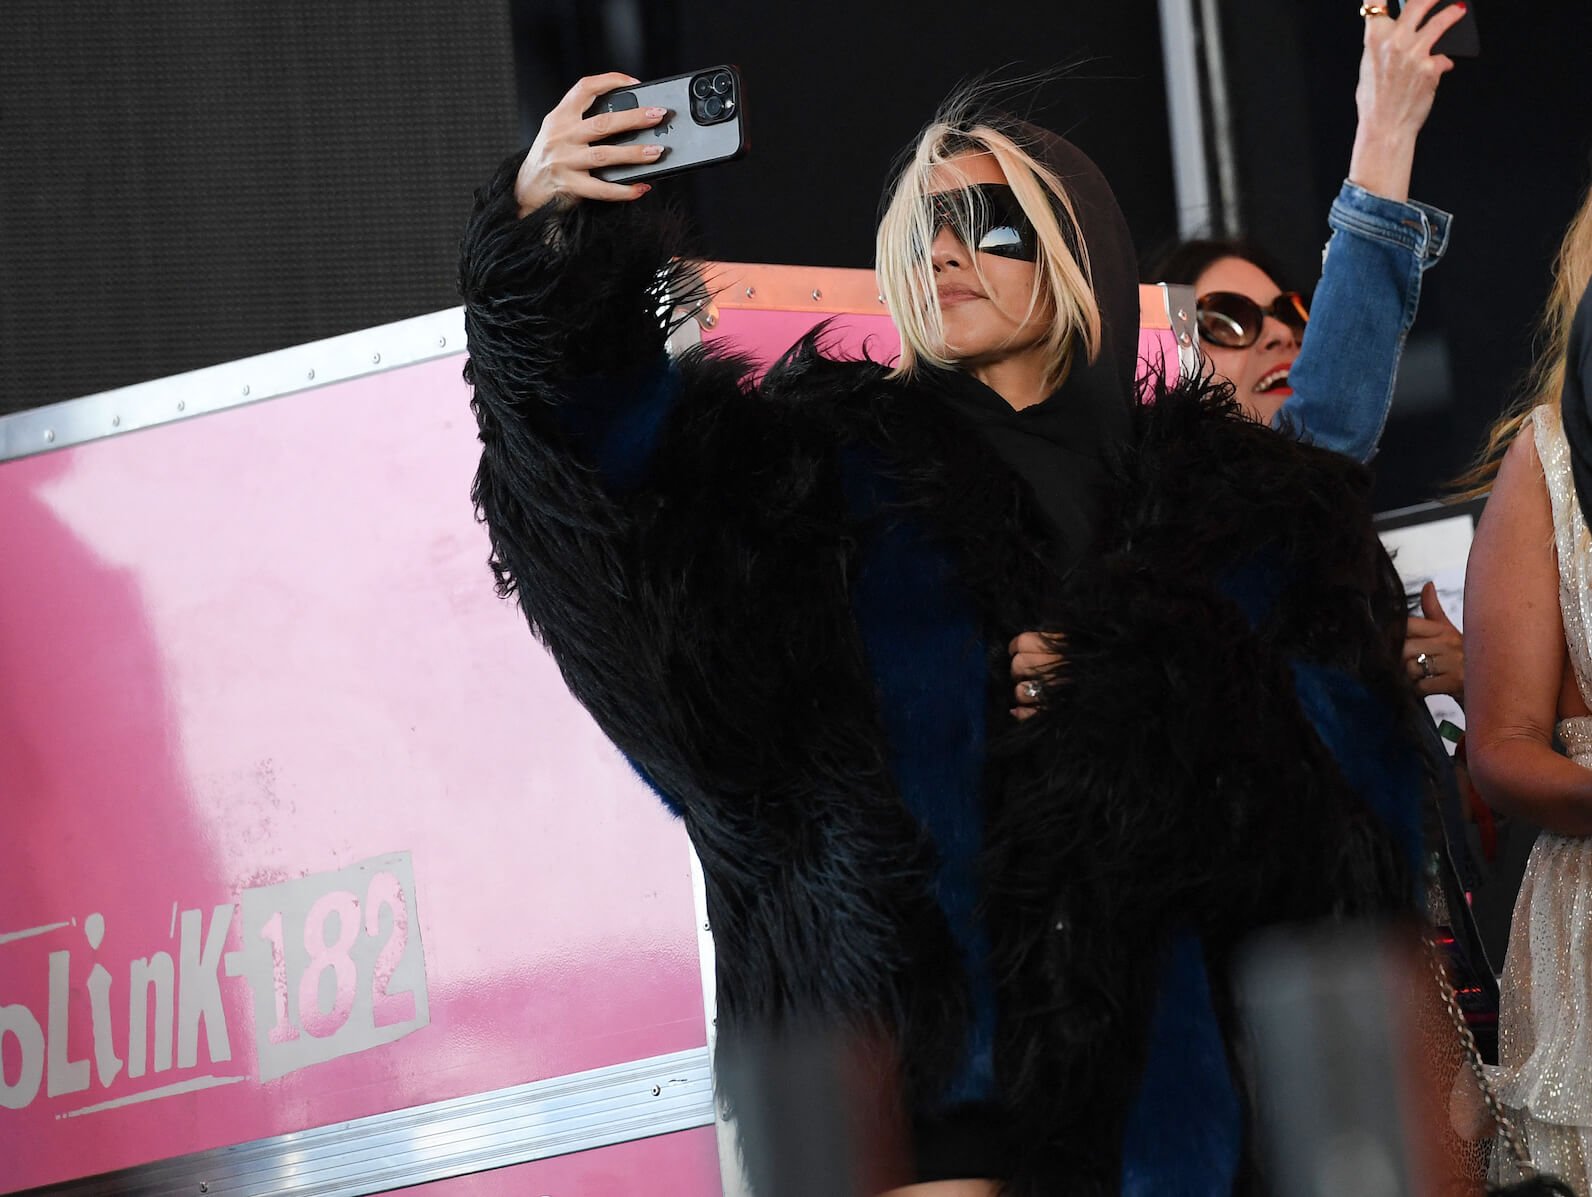 Kourtney Kardashian with blonde hair holding up her phone